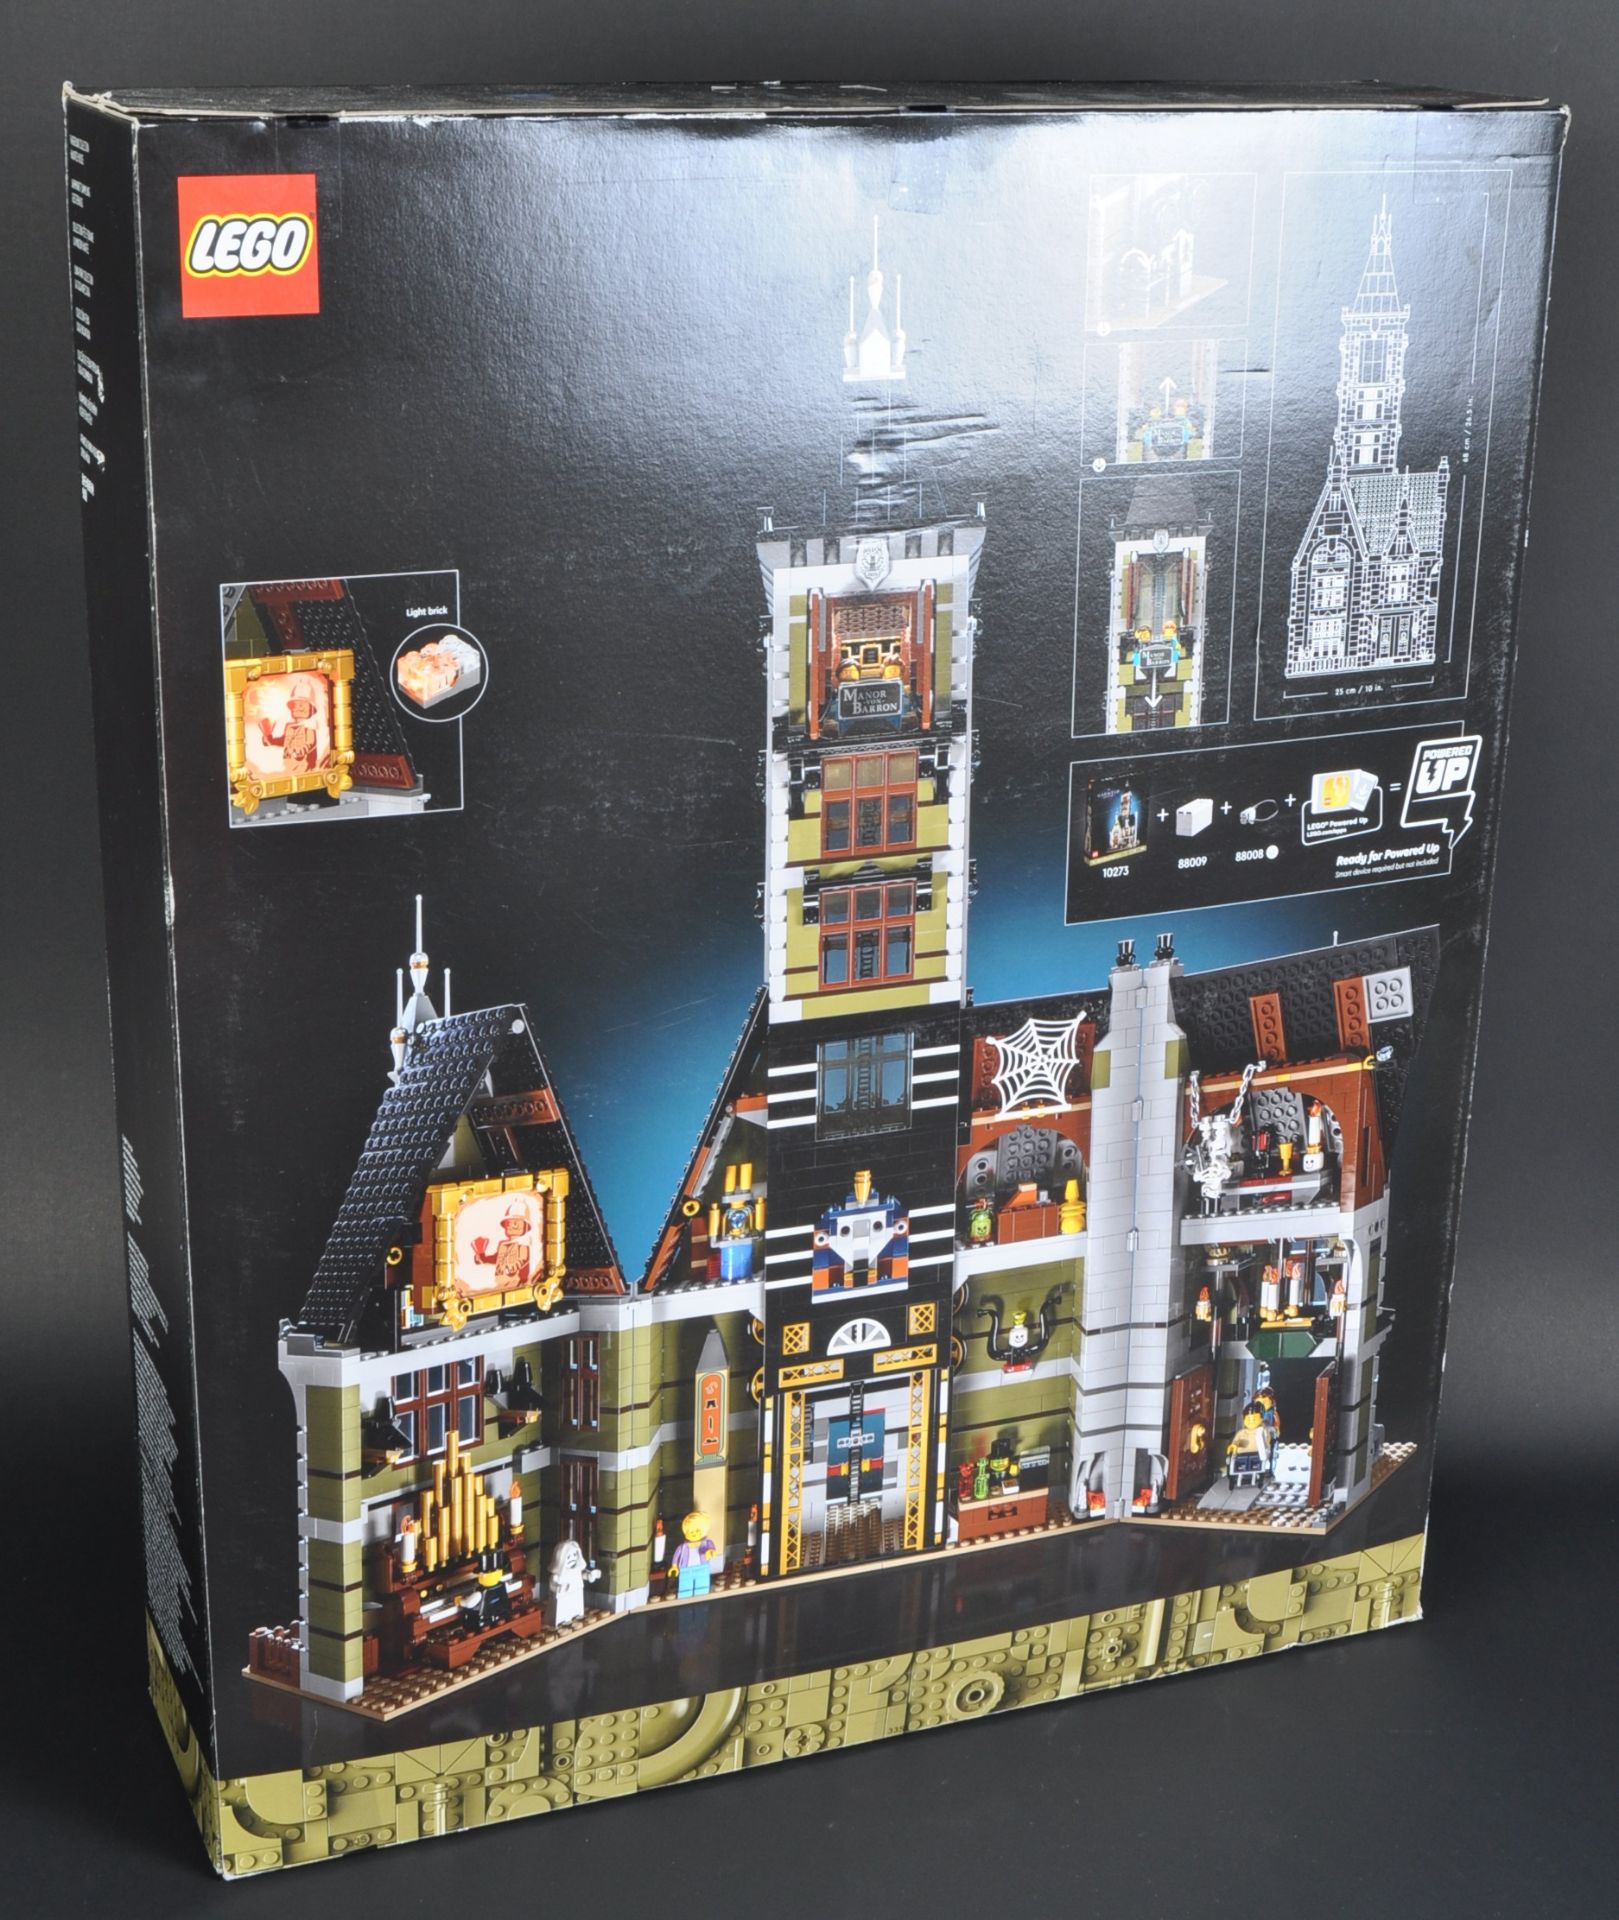 LEGO SET - FAIRGROUND COLLECTION - 10273 - HAUNTED HOUSE - Image 2 of 3